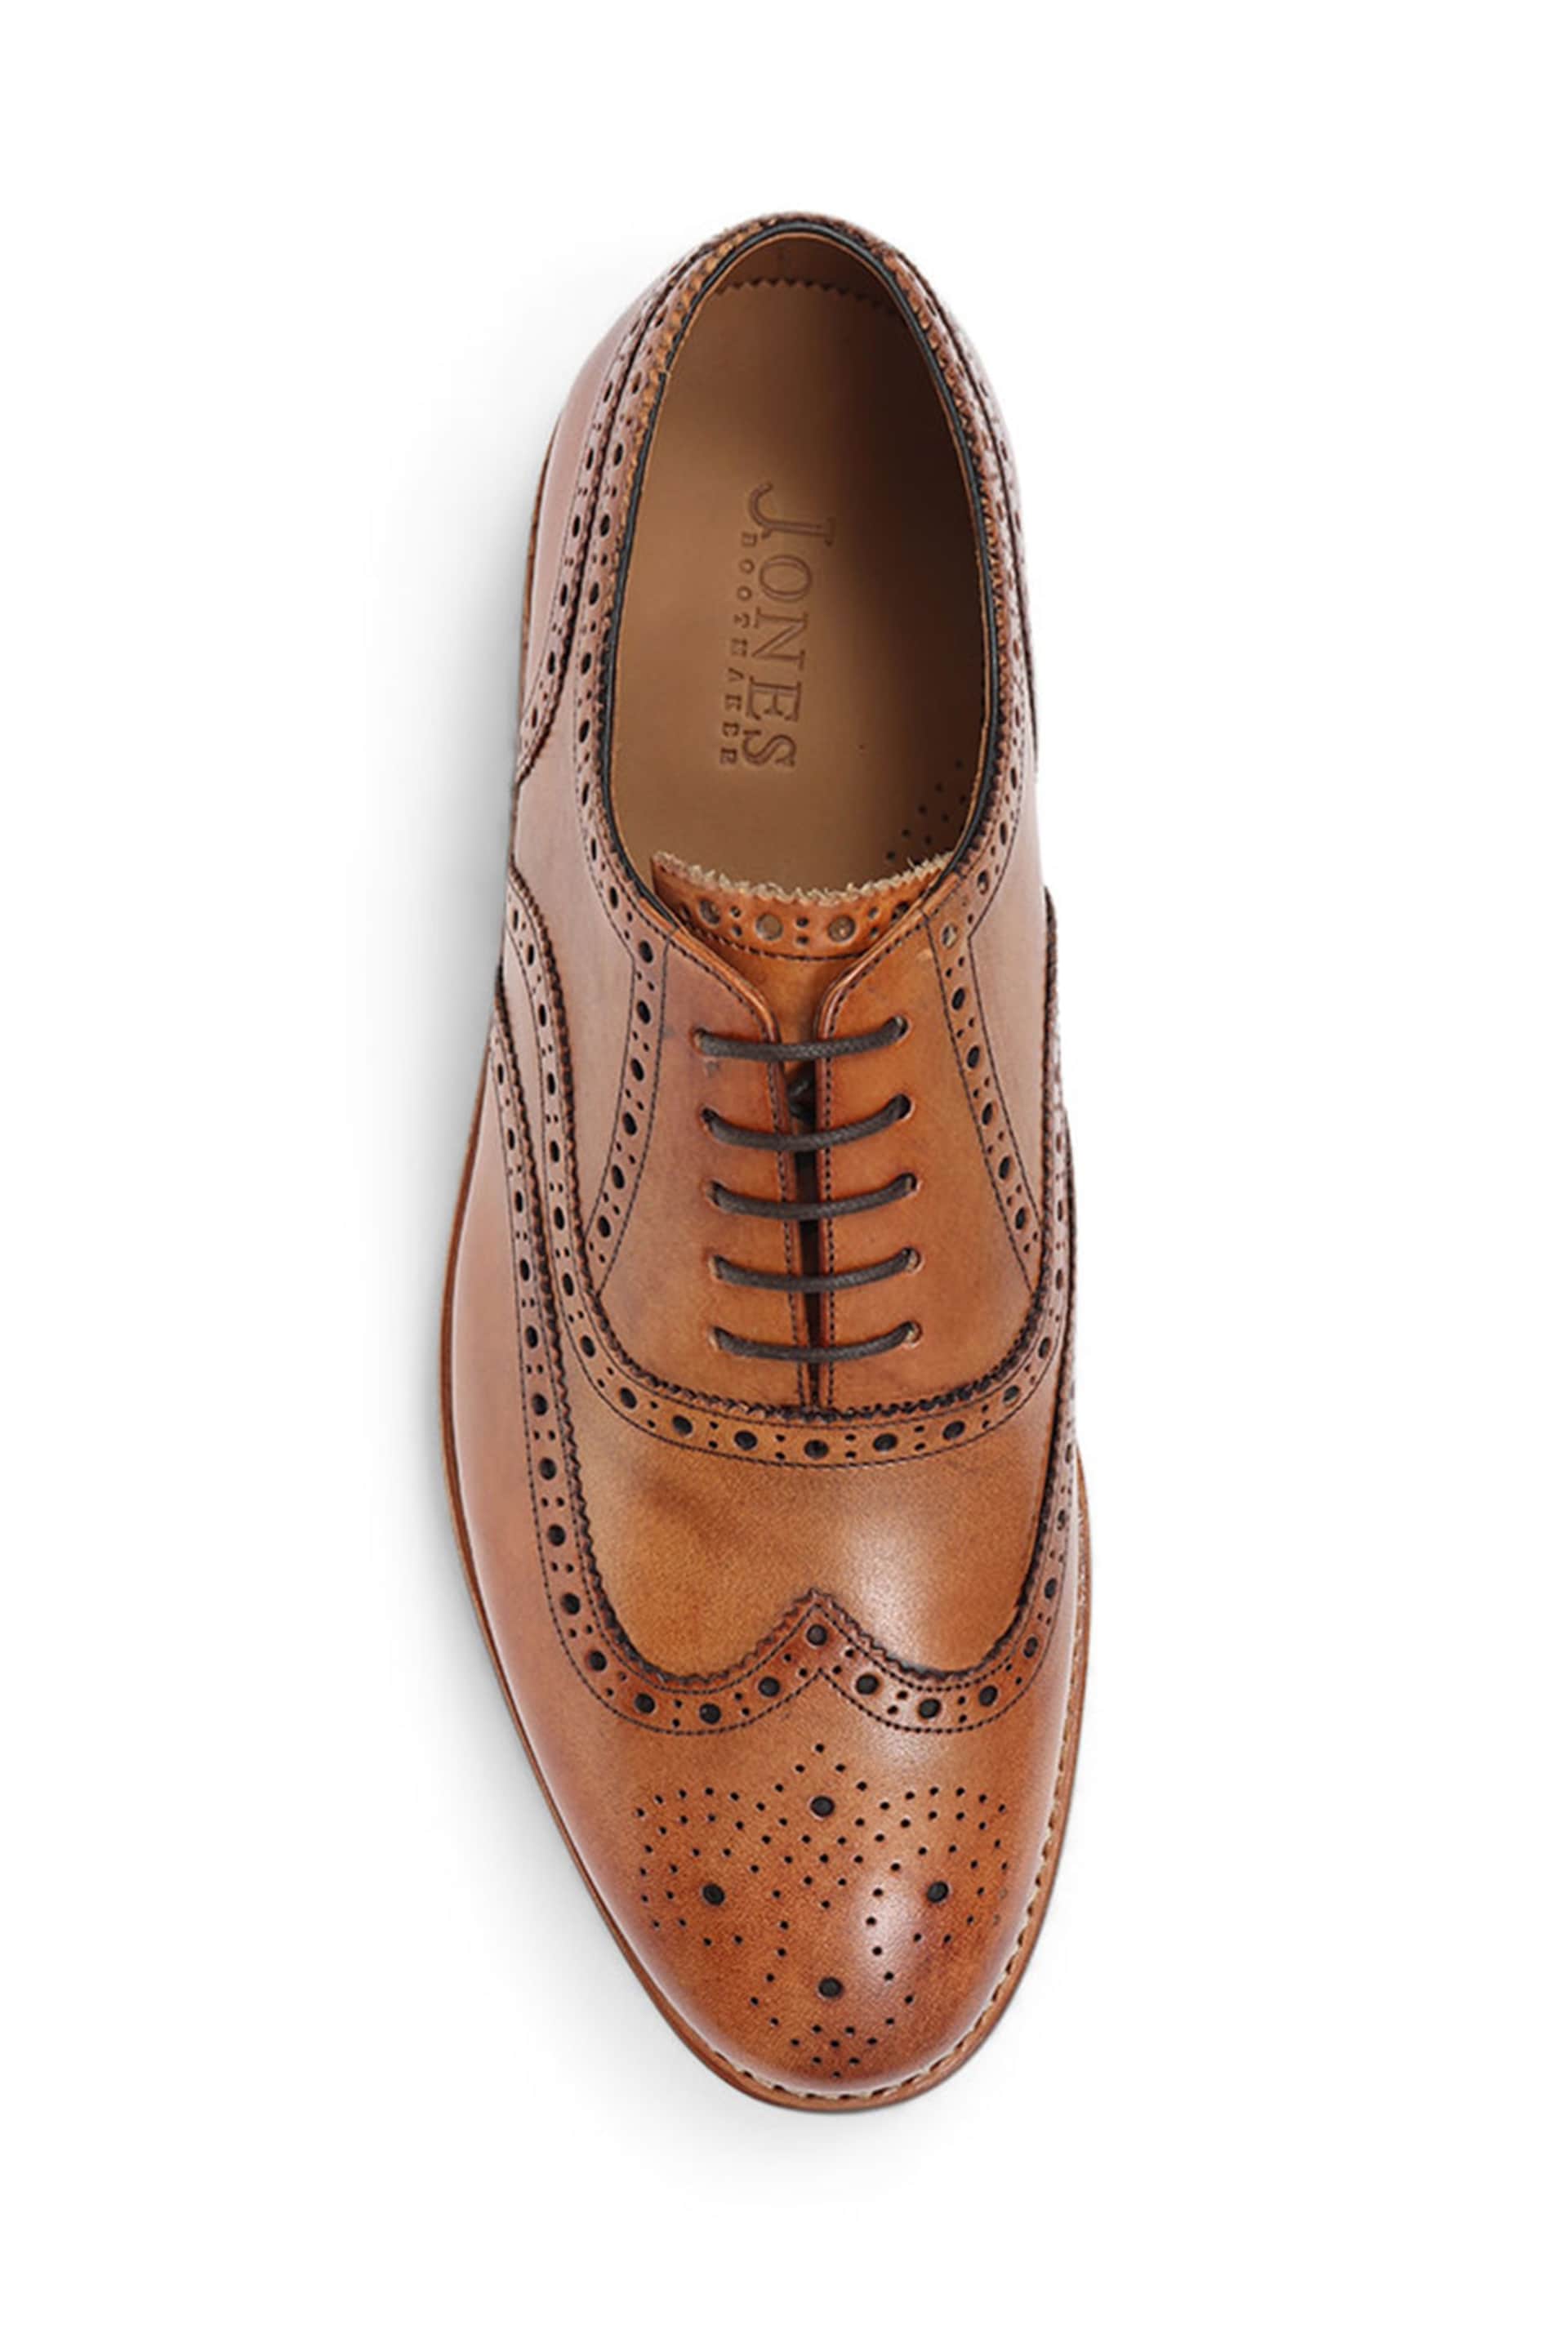 Jones Bootmaker Tan Gents Leather Lace Smart Shoes - Image 5 of 6